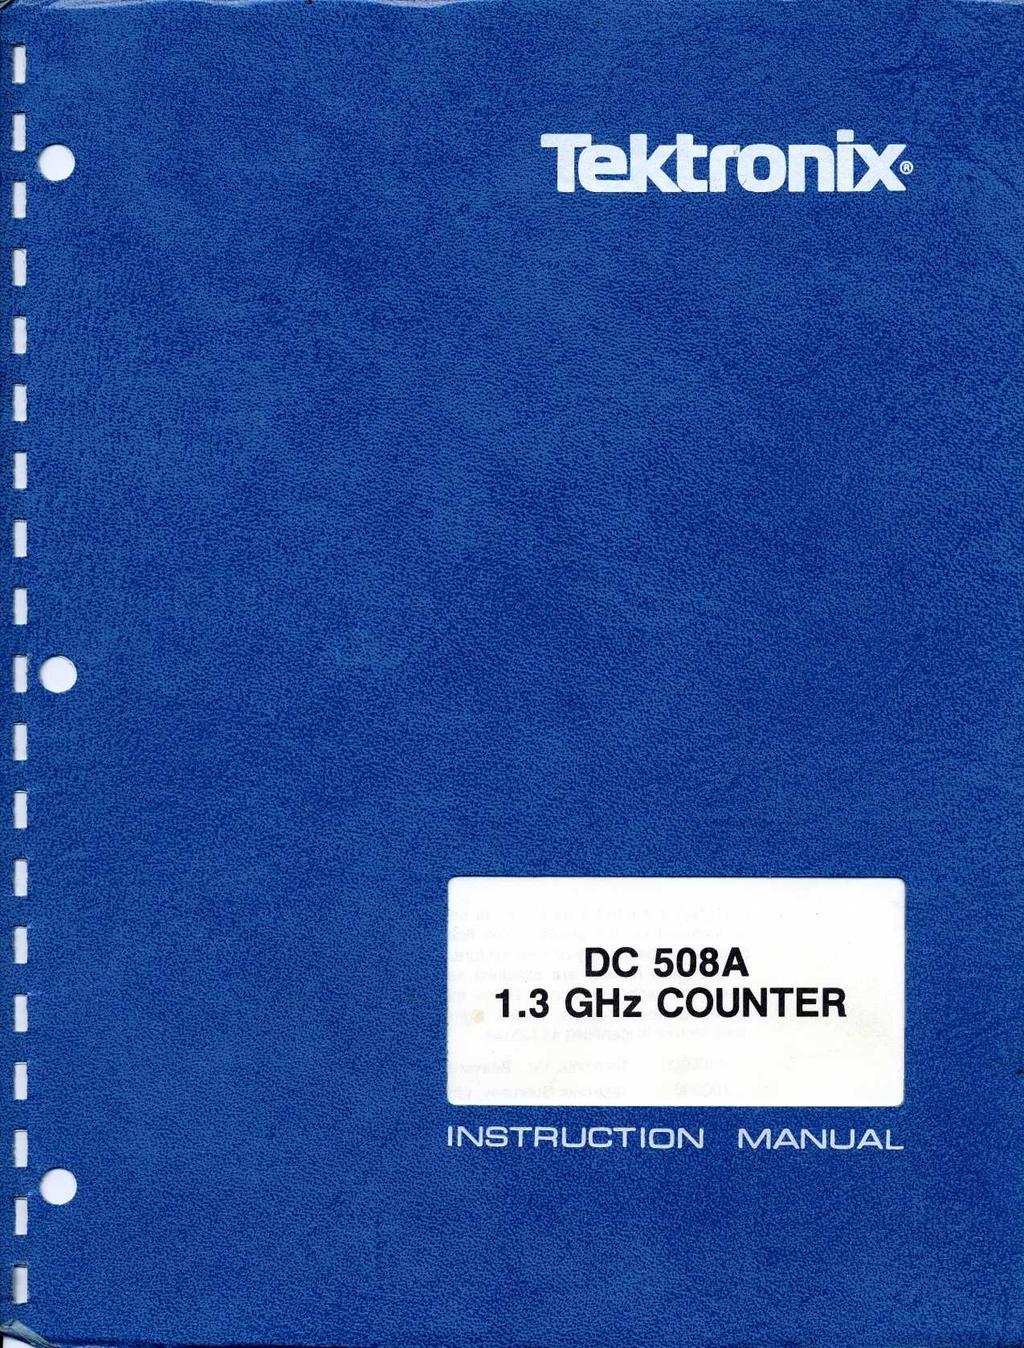 Tektronix TM 503 Power Module Instruction Manual OEM Owner's Manual 